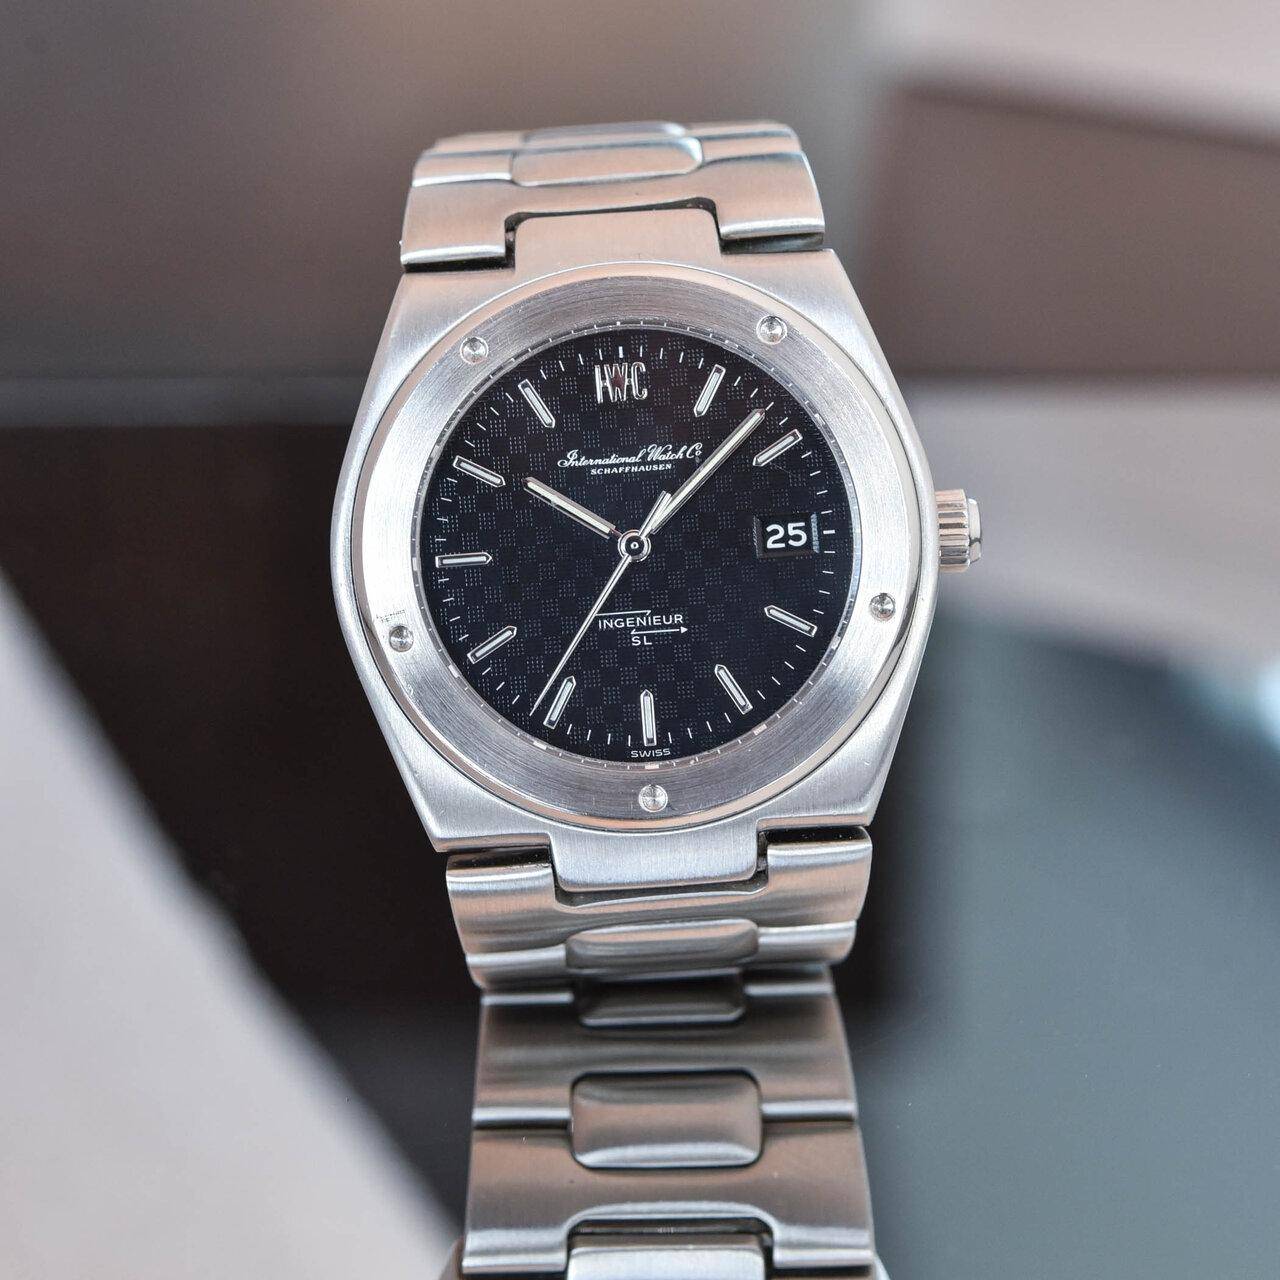 IWC-ingenieur-SL-Jumbo-ref-1832-Genta-design-luxury-sports-watch-3.jpg